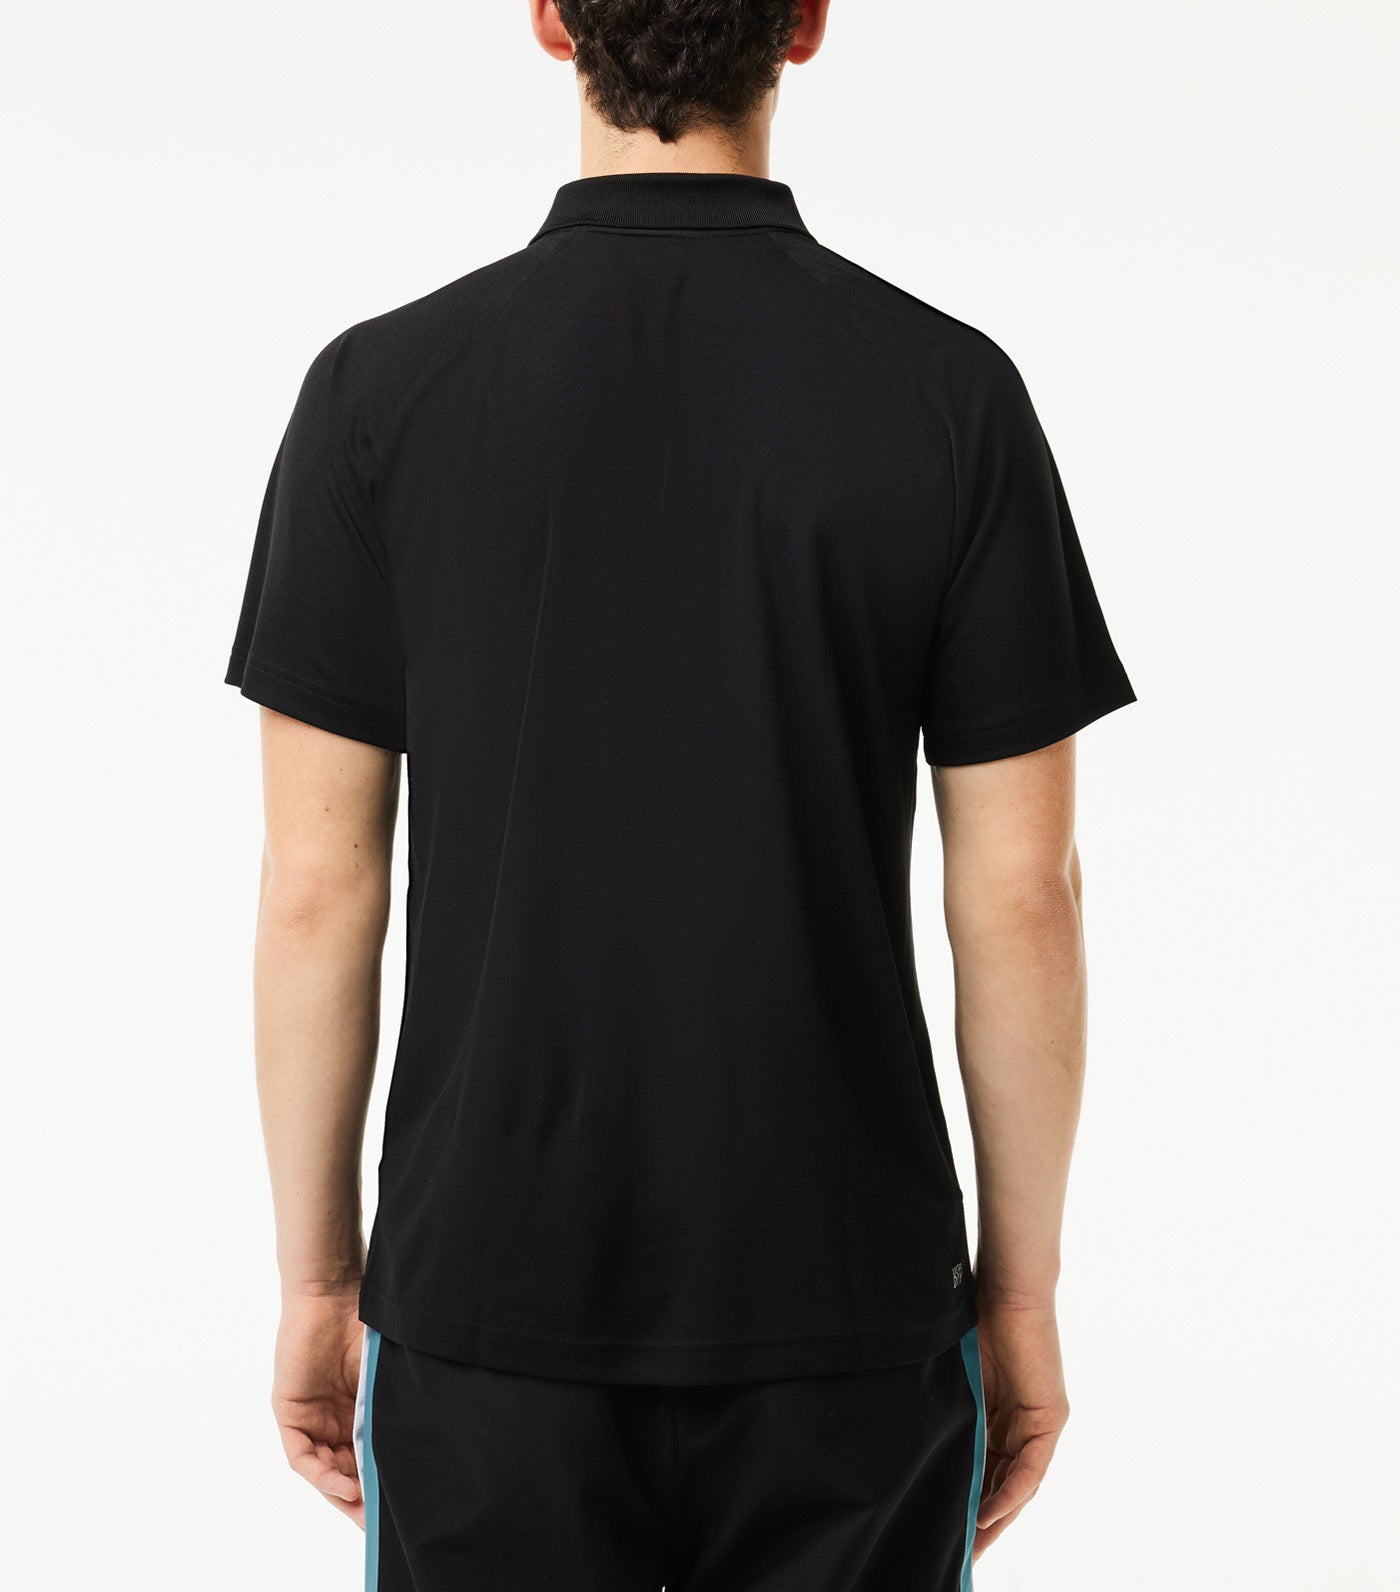 Men's Lacoste Sport Breathable Run-Resistant Interlock Polo Shirt Black